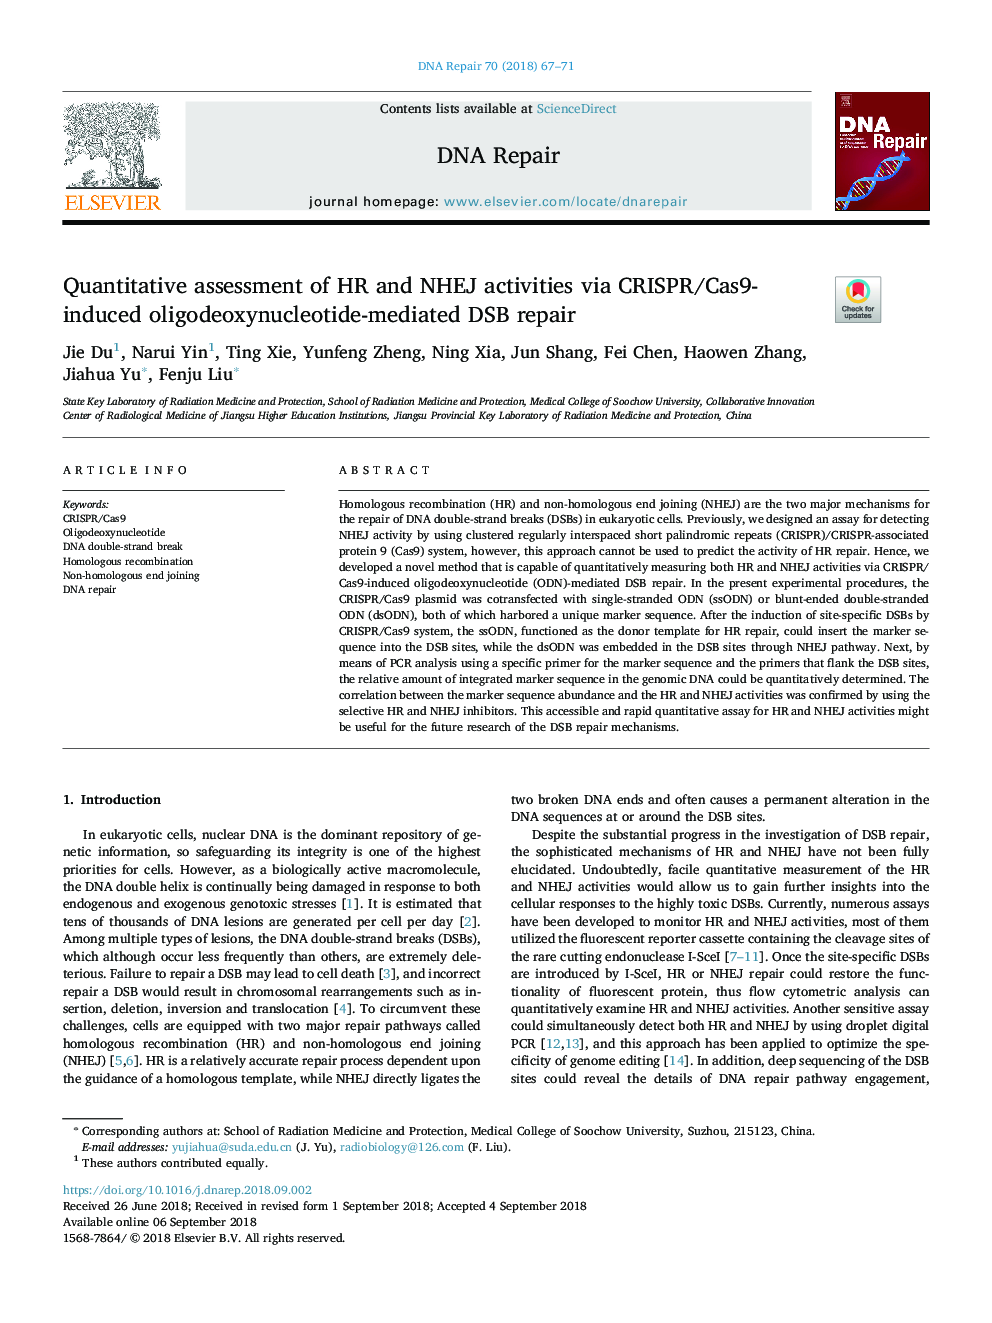 Quantitative assessment of HR and NHEJ activities via CRISPR/Cas9-induced oligodeoxynucleotide-mediated DSB repair